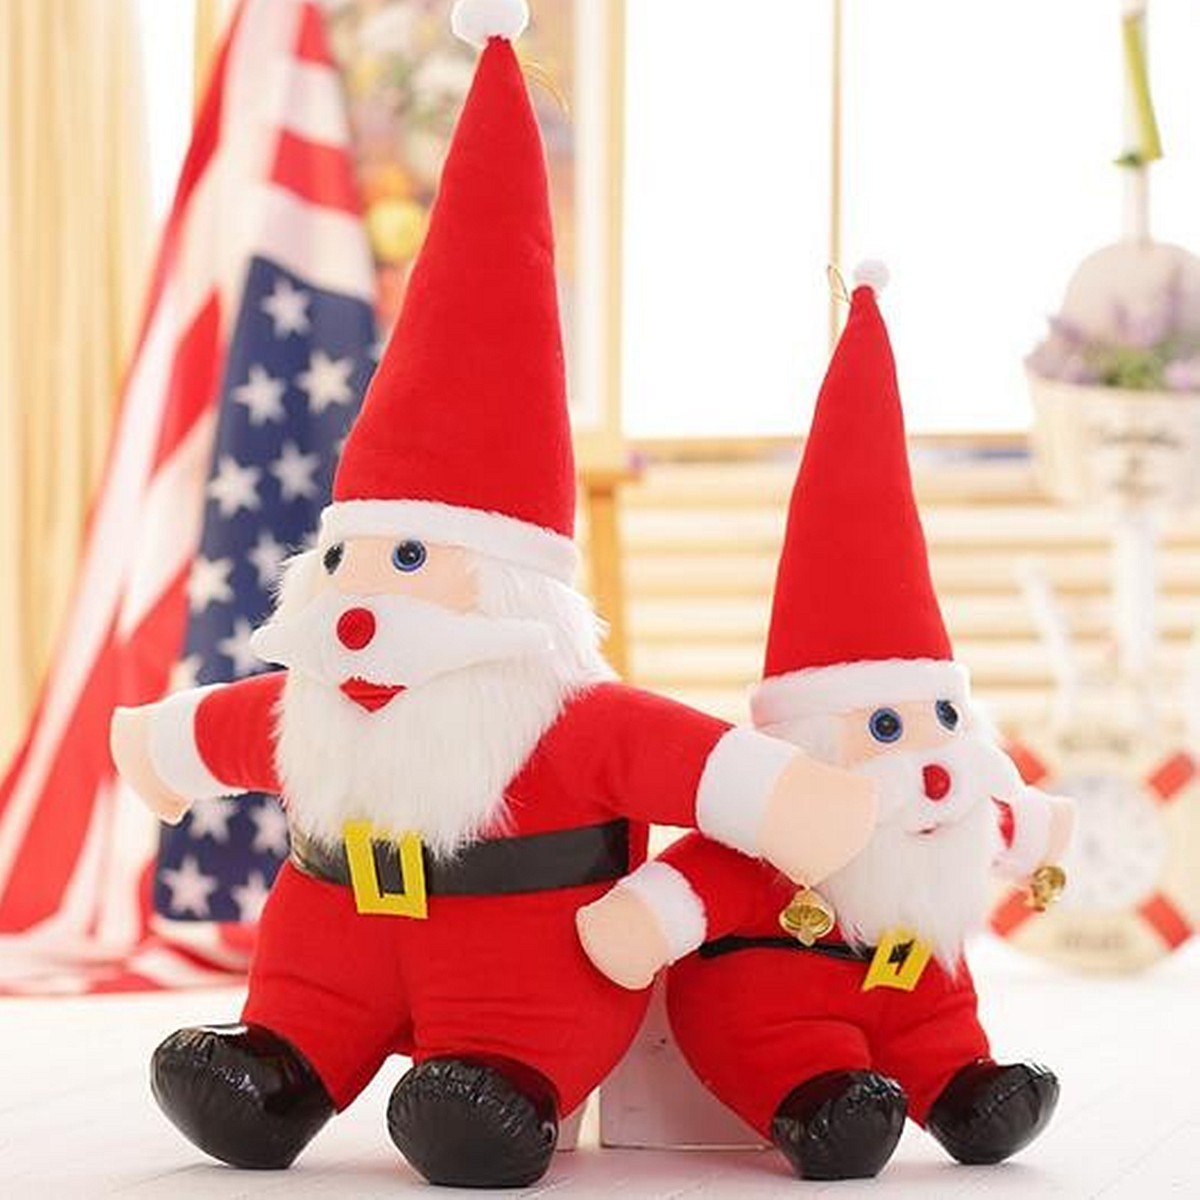 Christmas-Santa-Claus-Doll-Gift-Present-Xmas-Tree-Hanging-Ornament-Home-Decor-1087849-3